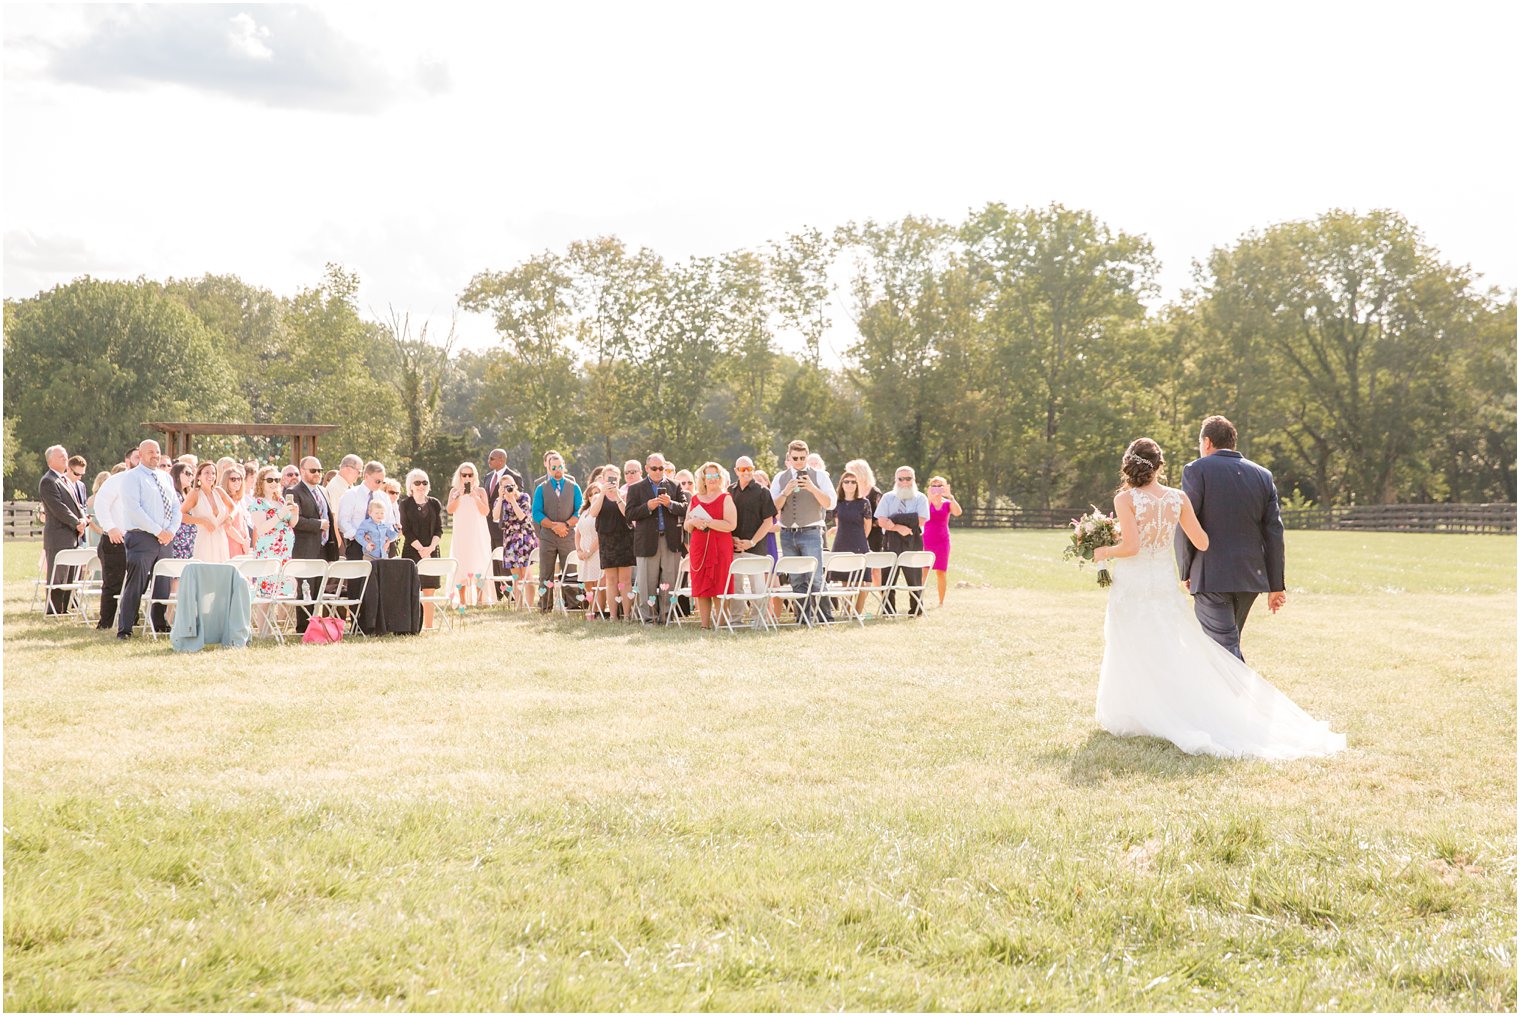 Wedding ceremony at Stone Rows Farm